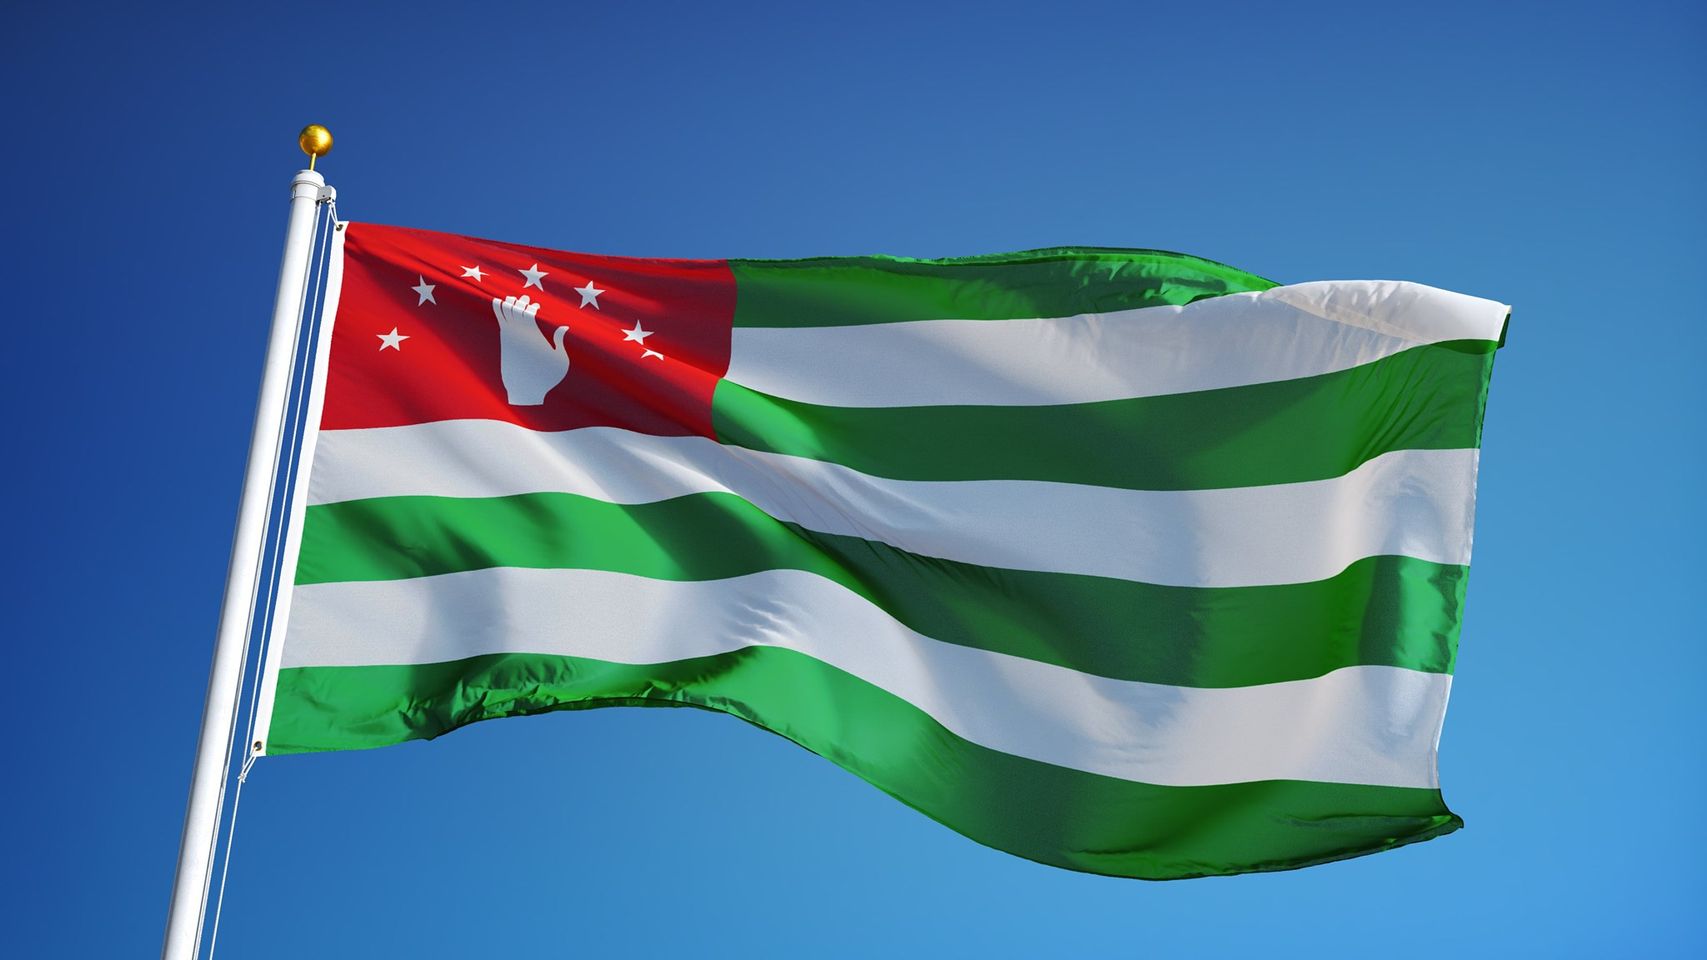 The flag of the Republic of Abkhazia